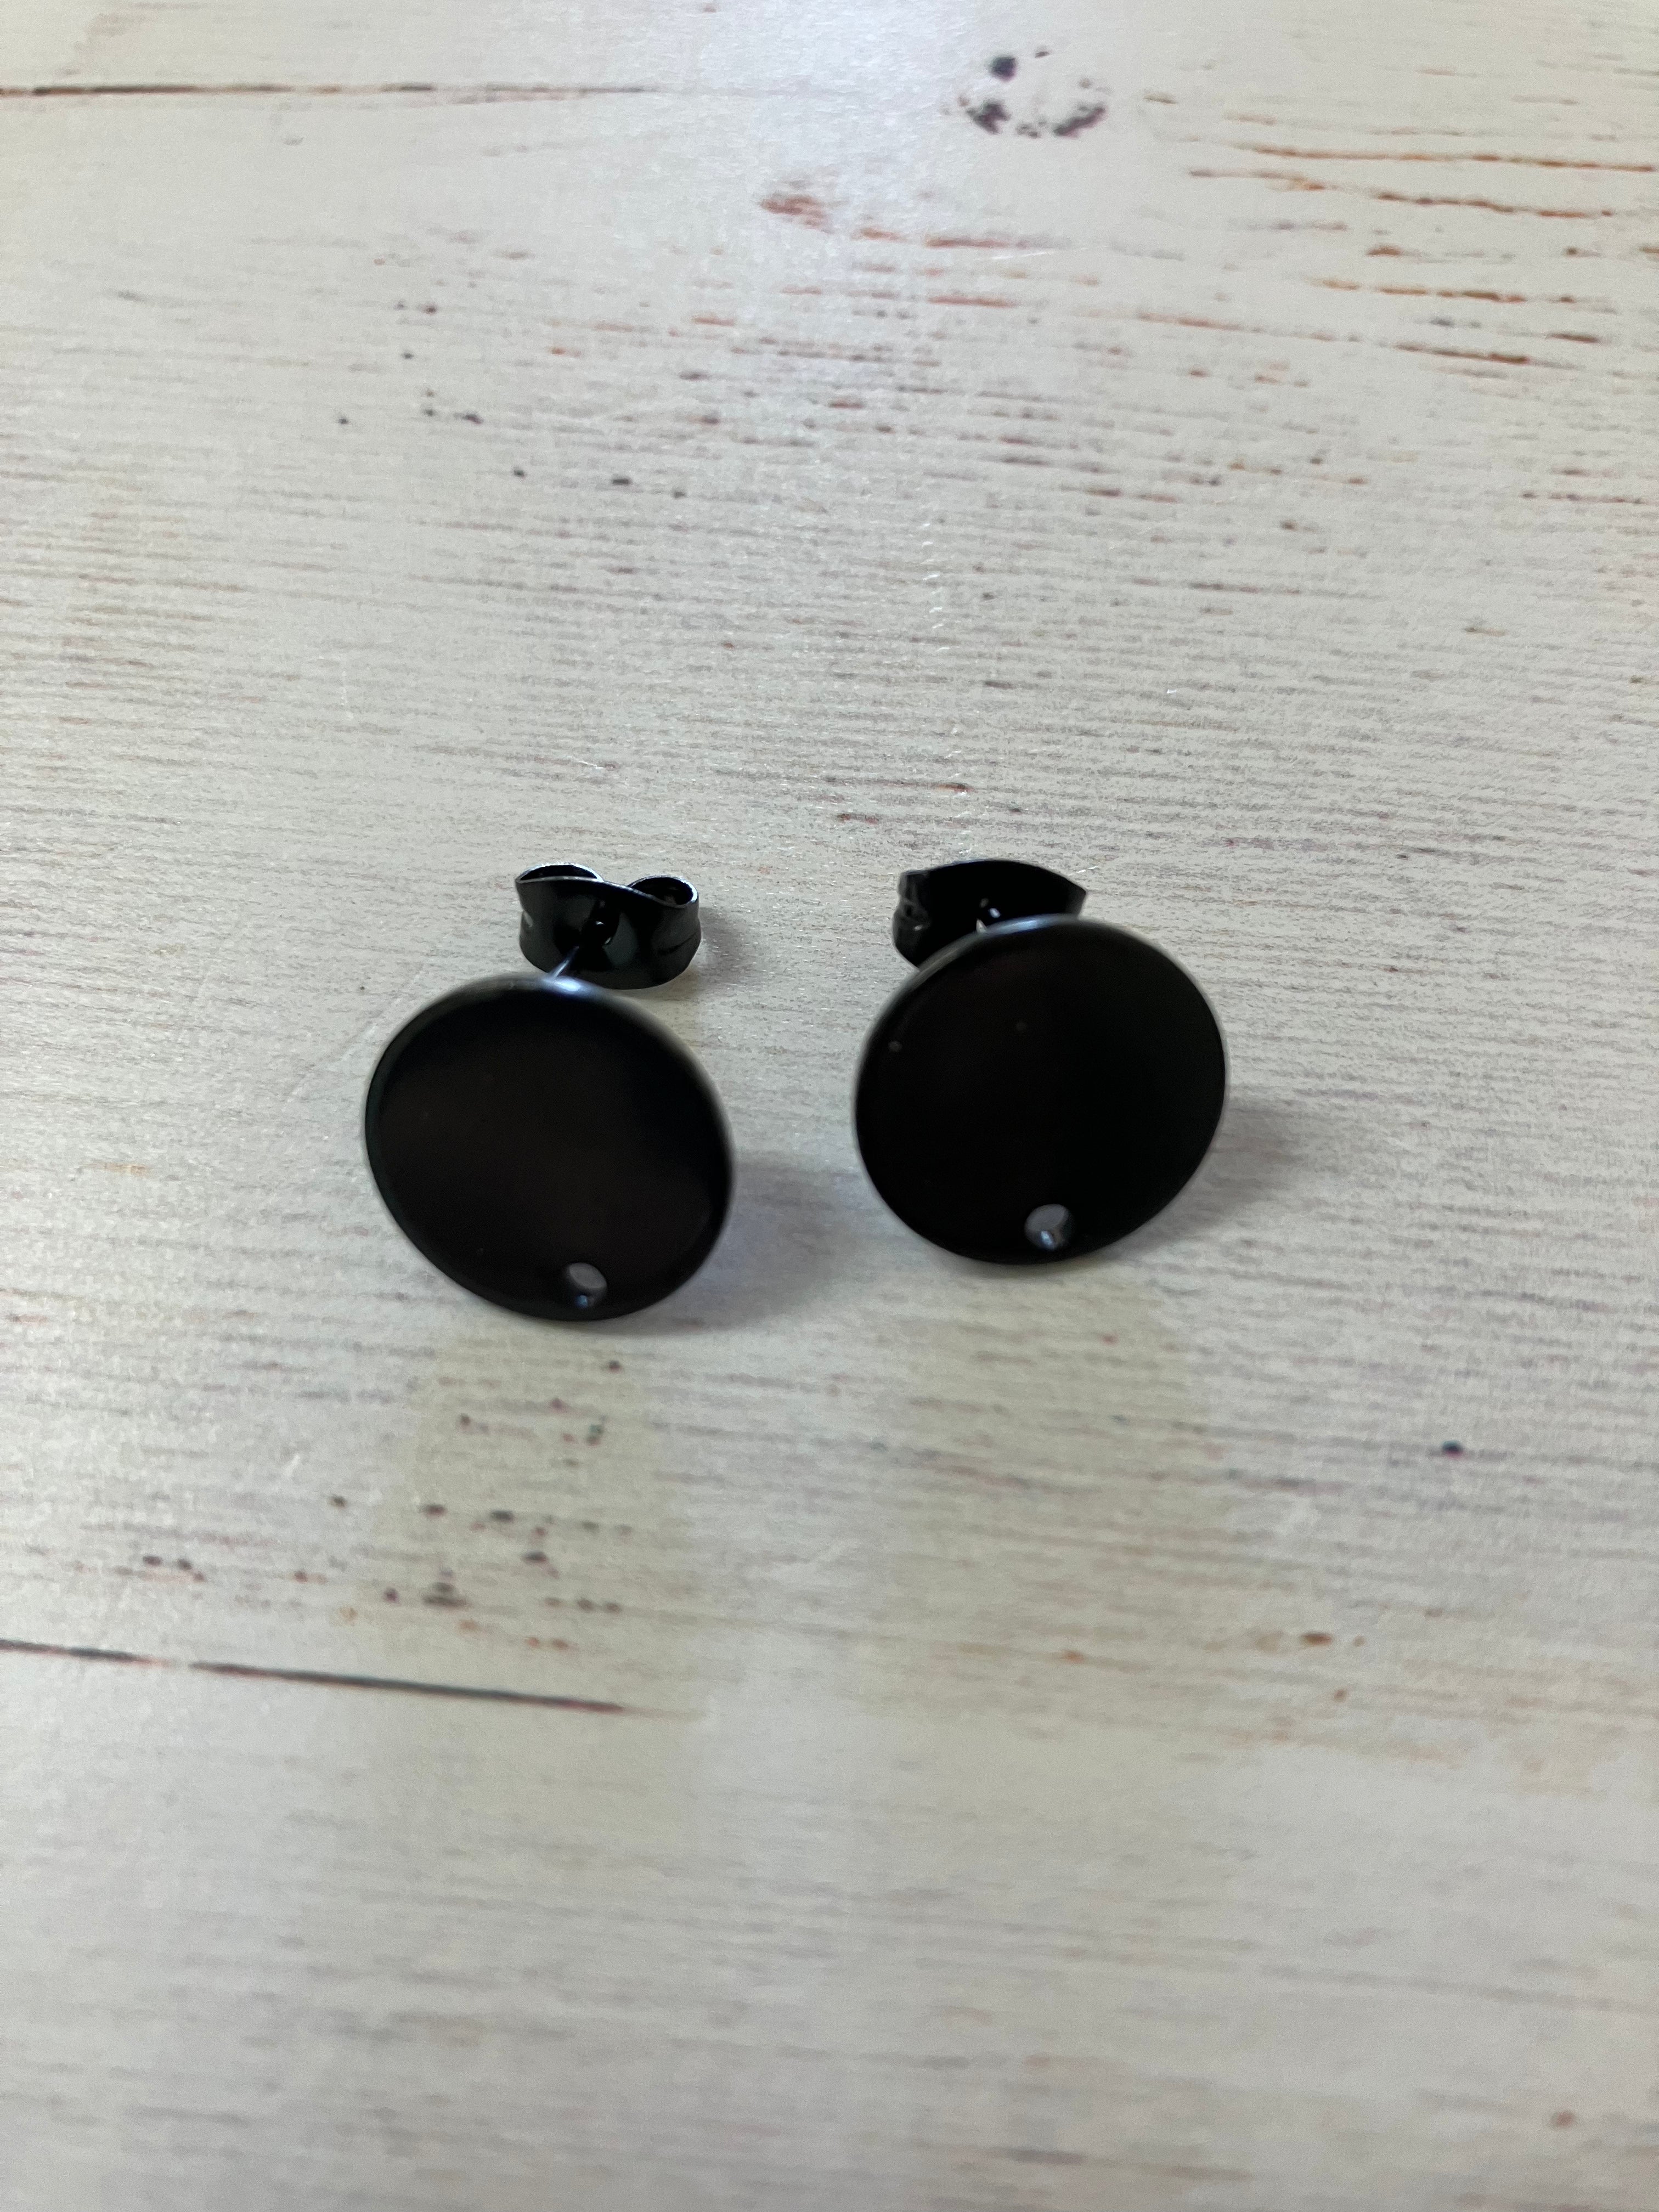 304 Stainless Steel Stud Earring Findings, with Loop and Flat Plate, Ear Nuts/Earring Backs, Flat Round, Electrophoresis Black (1 Pair)